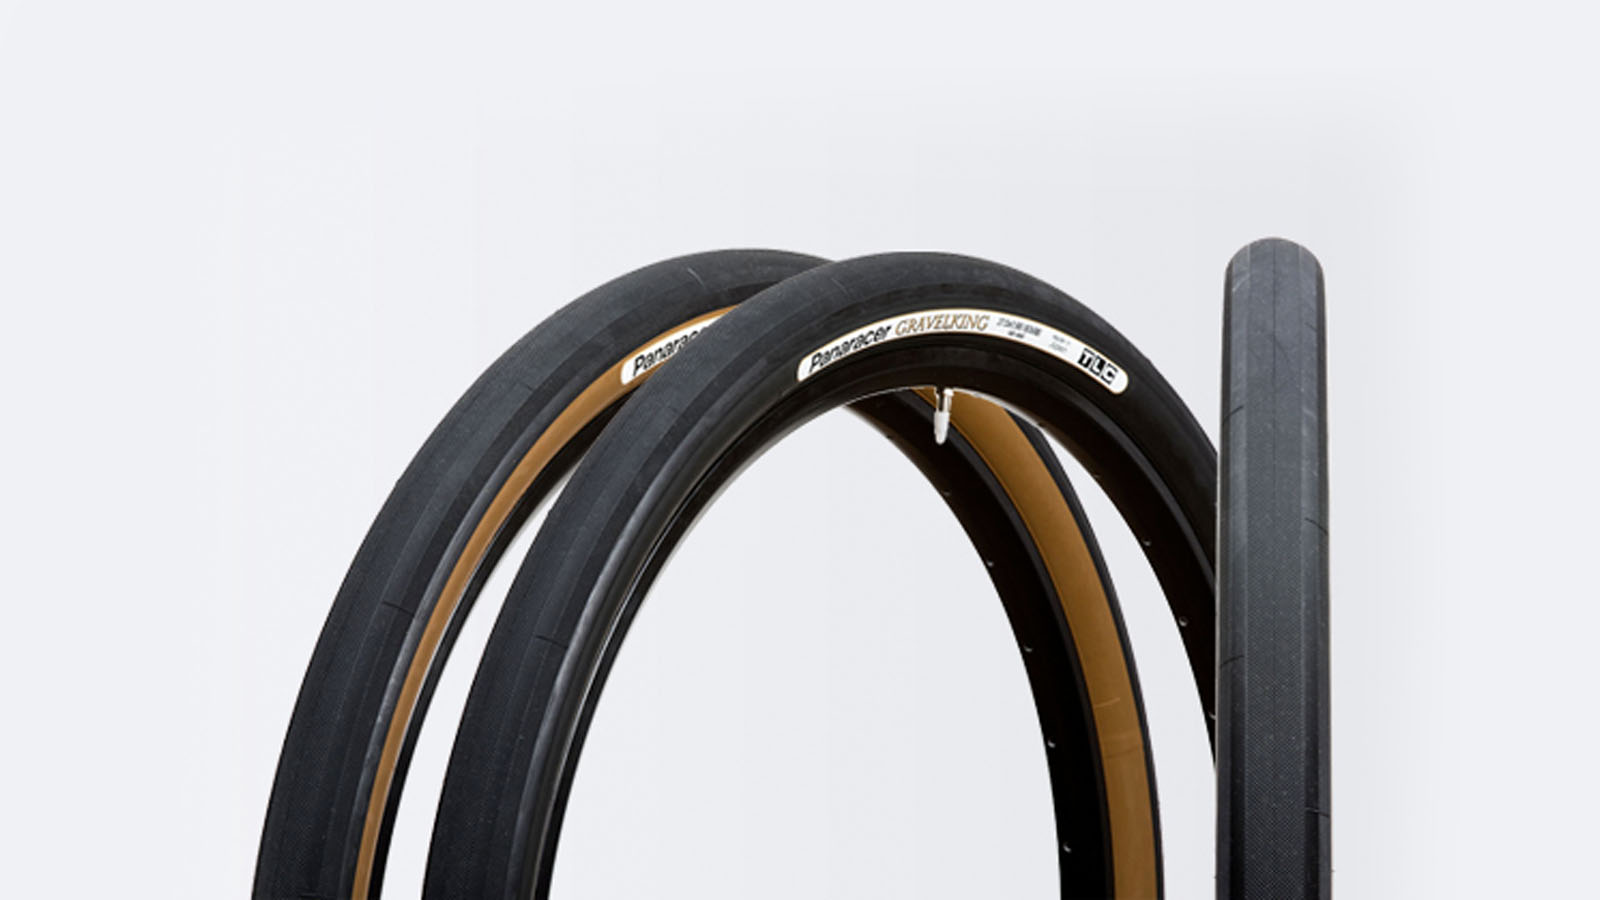 puncture resistant road bike tires